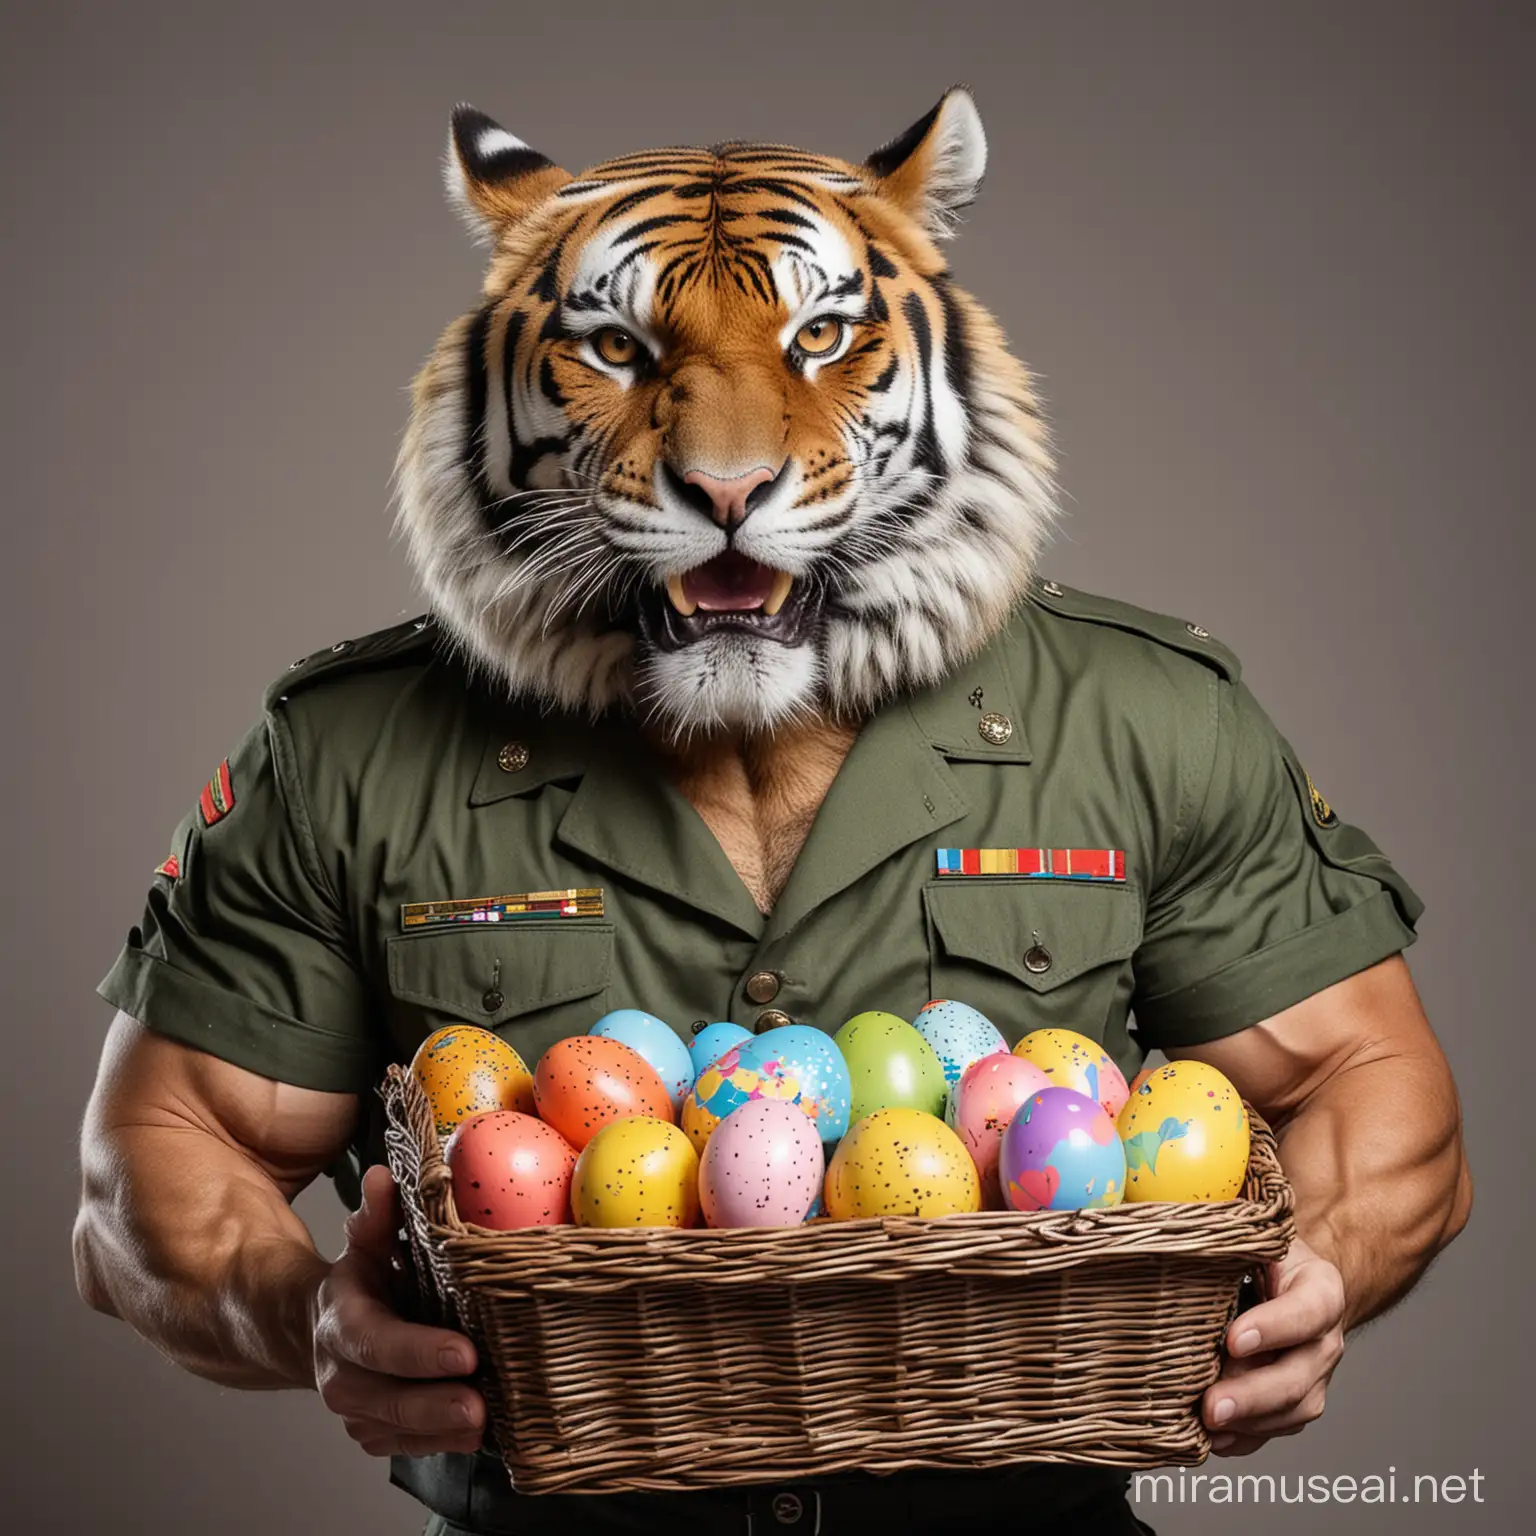 Military Uniformed Tiger with Easter Basket